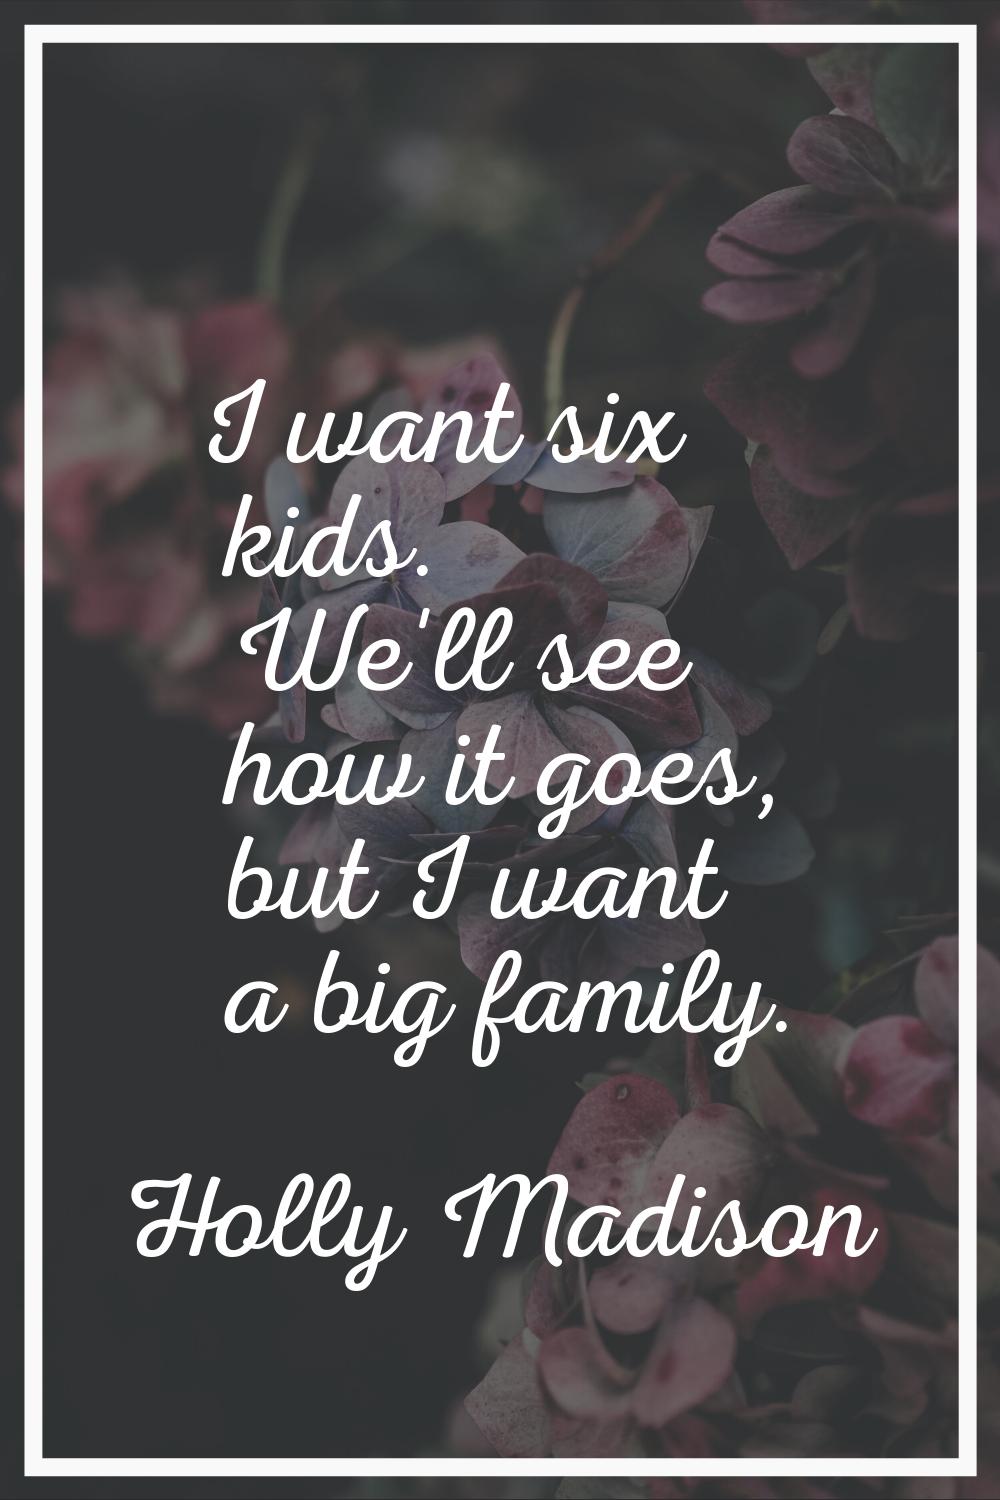 I want six kids. We'll see how it goes, but I want a big family.